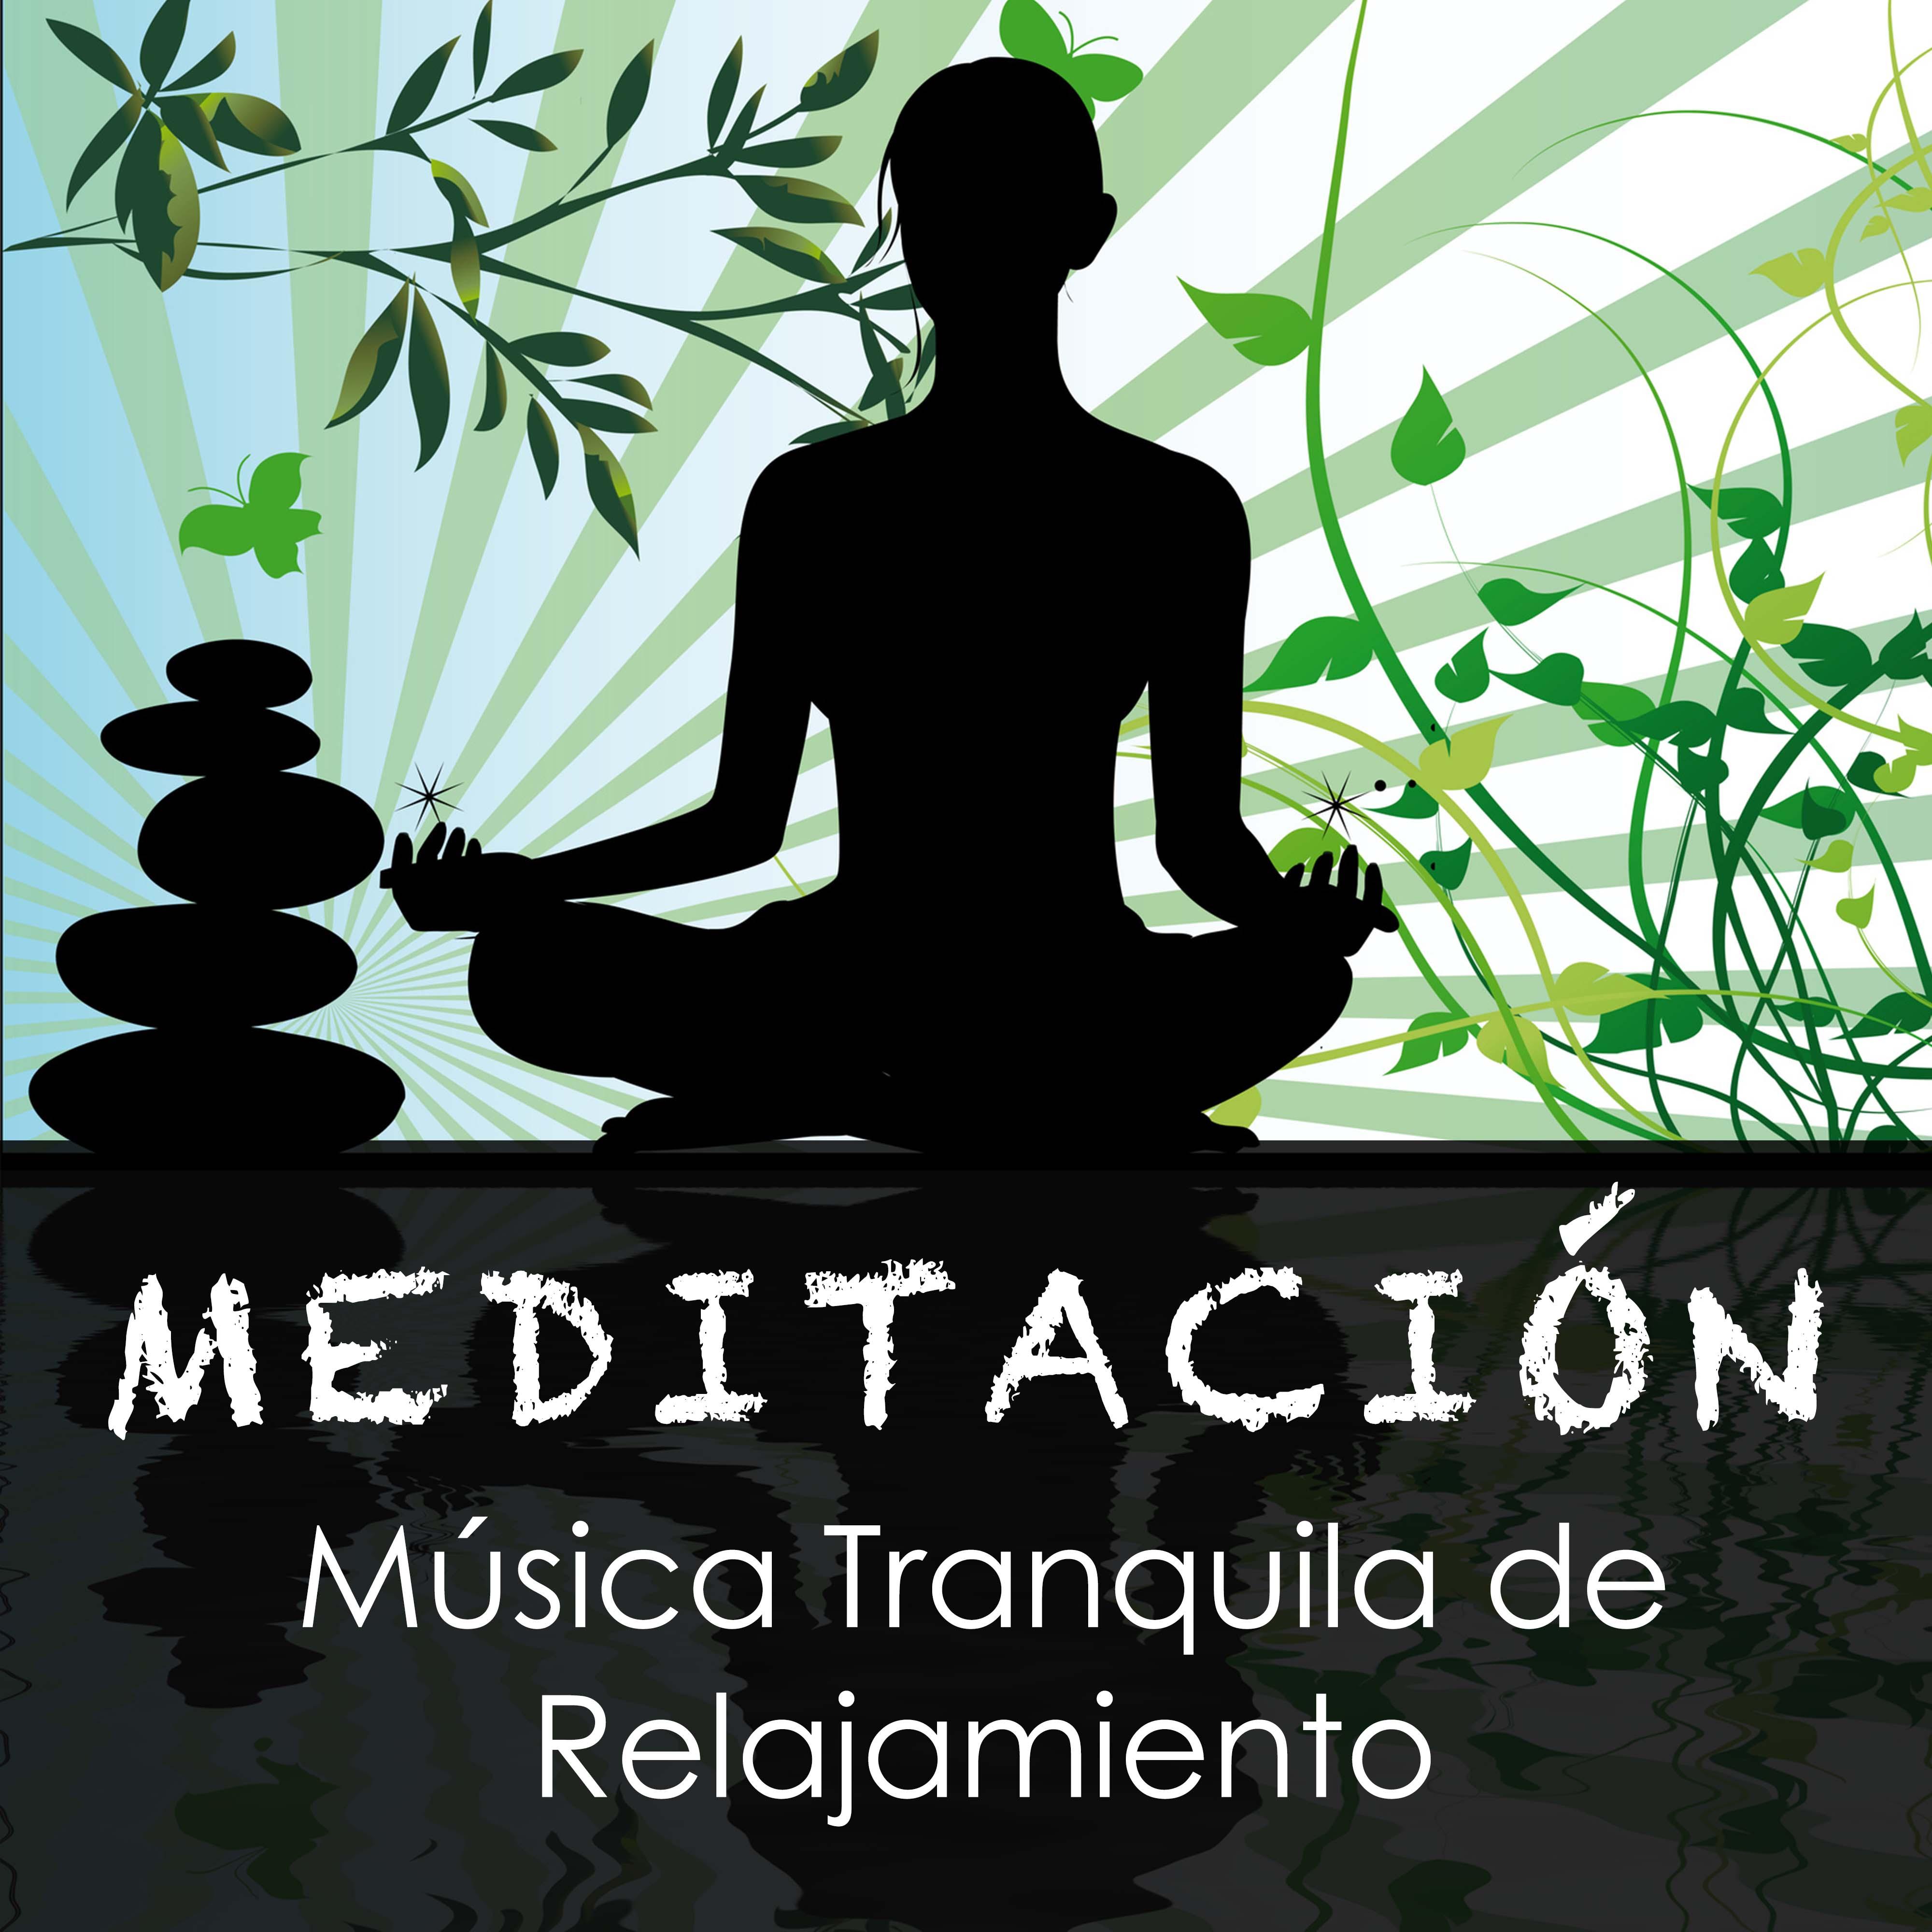 Meditacio n: Piano  Flauta